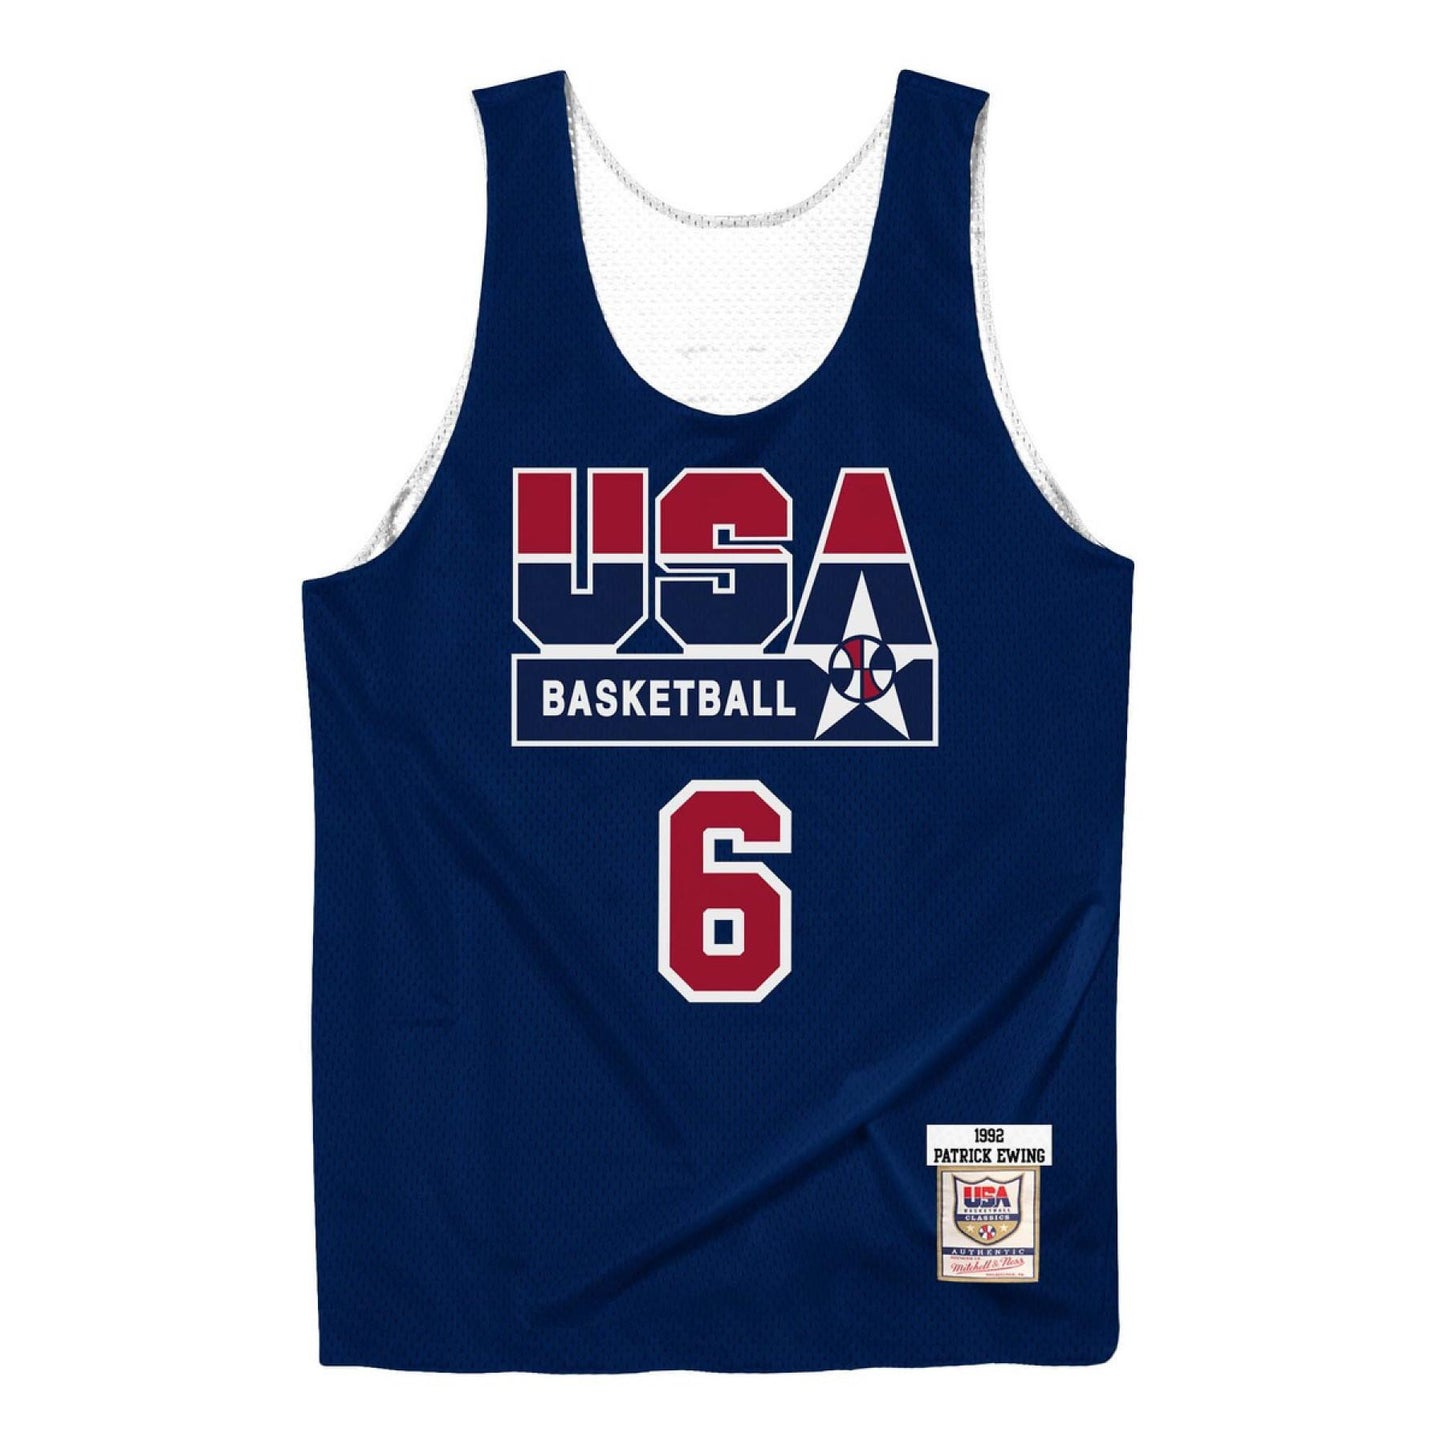 NBA Authentic Reversible Practice Jersey Team USA 1992 Patrick Ewing